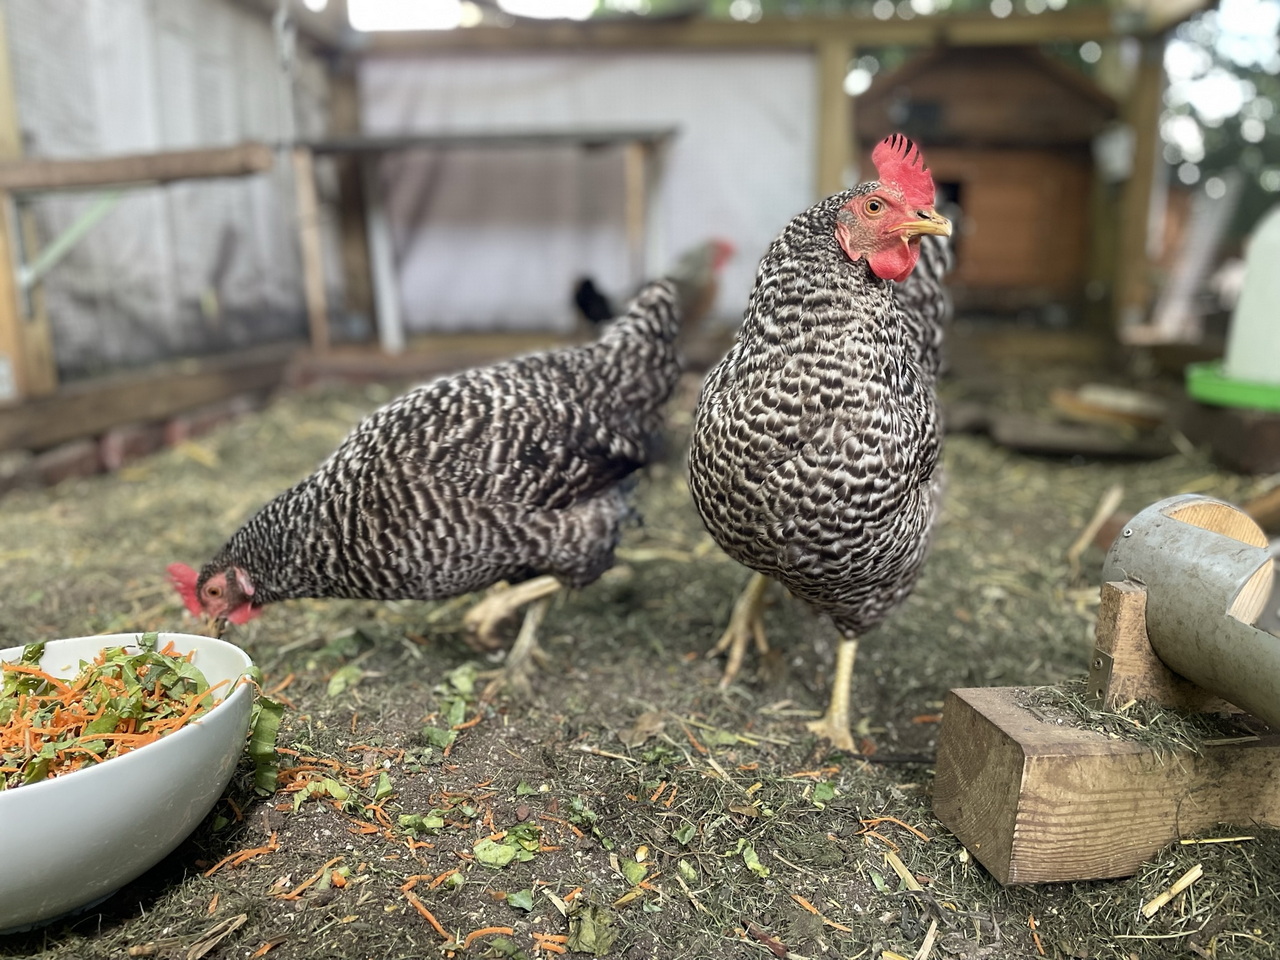 pampered-chickens-